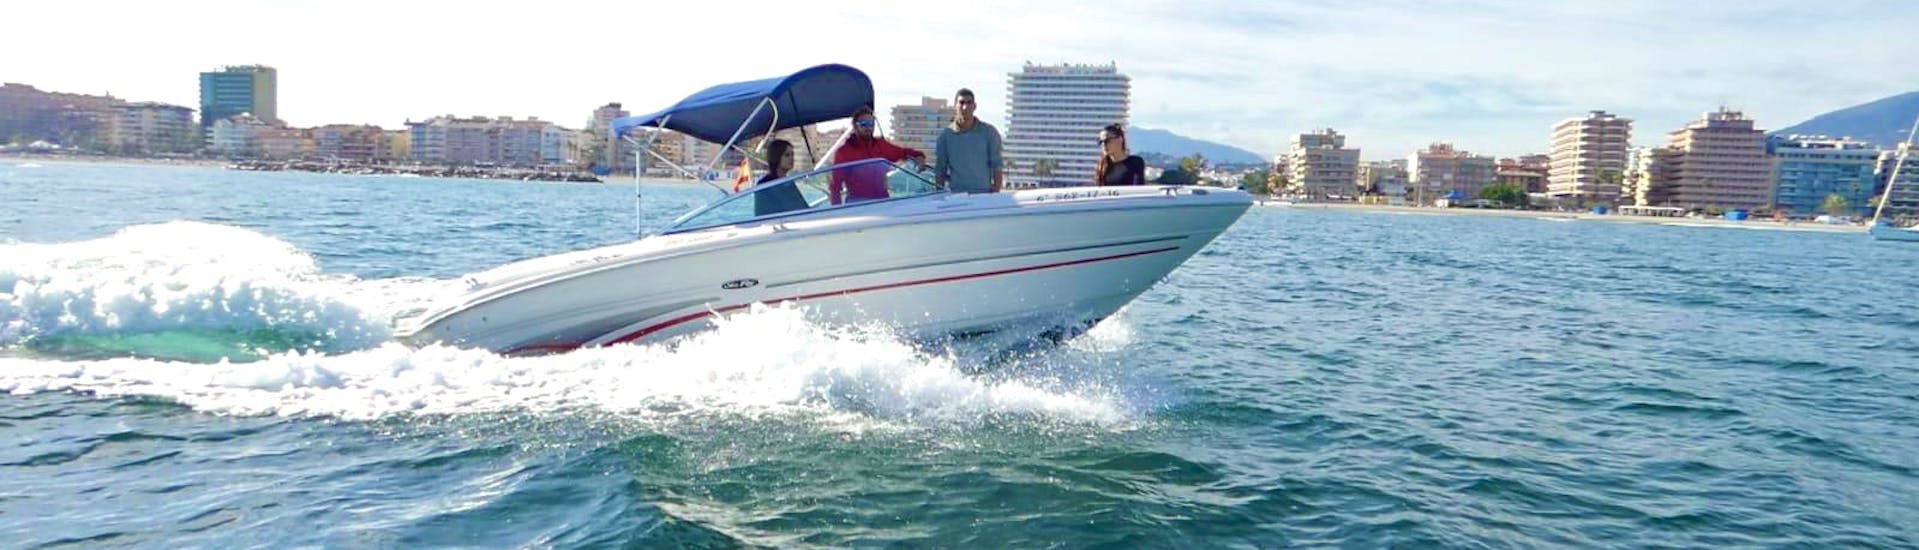 Un luxueux bateau SEA RAY SELECT 200 naviguant le long de la mer d'Alboran lors d'une location de bateau à Marbella pour un maximum de 8 personnes avec permis avec Marbella Renting Boat.